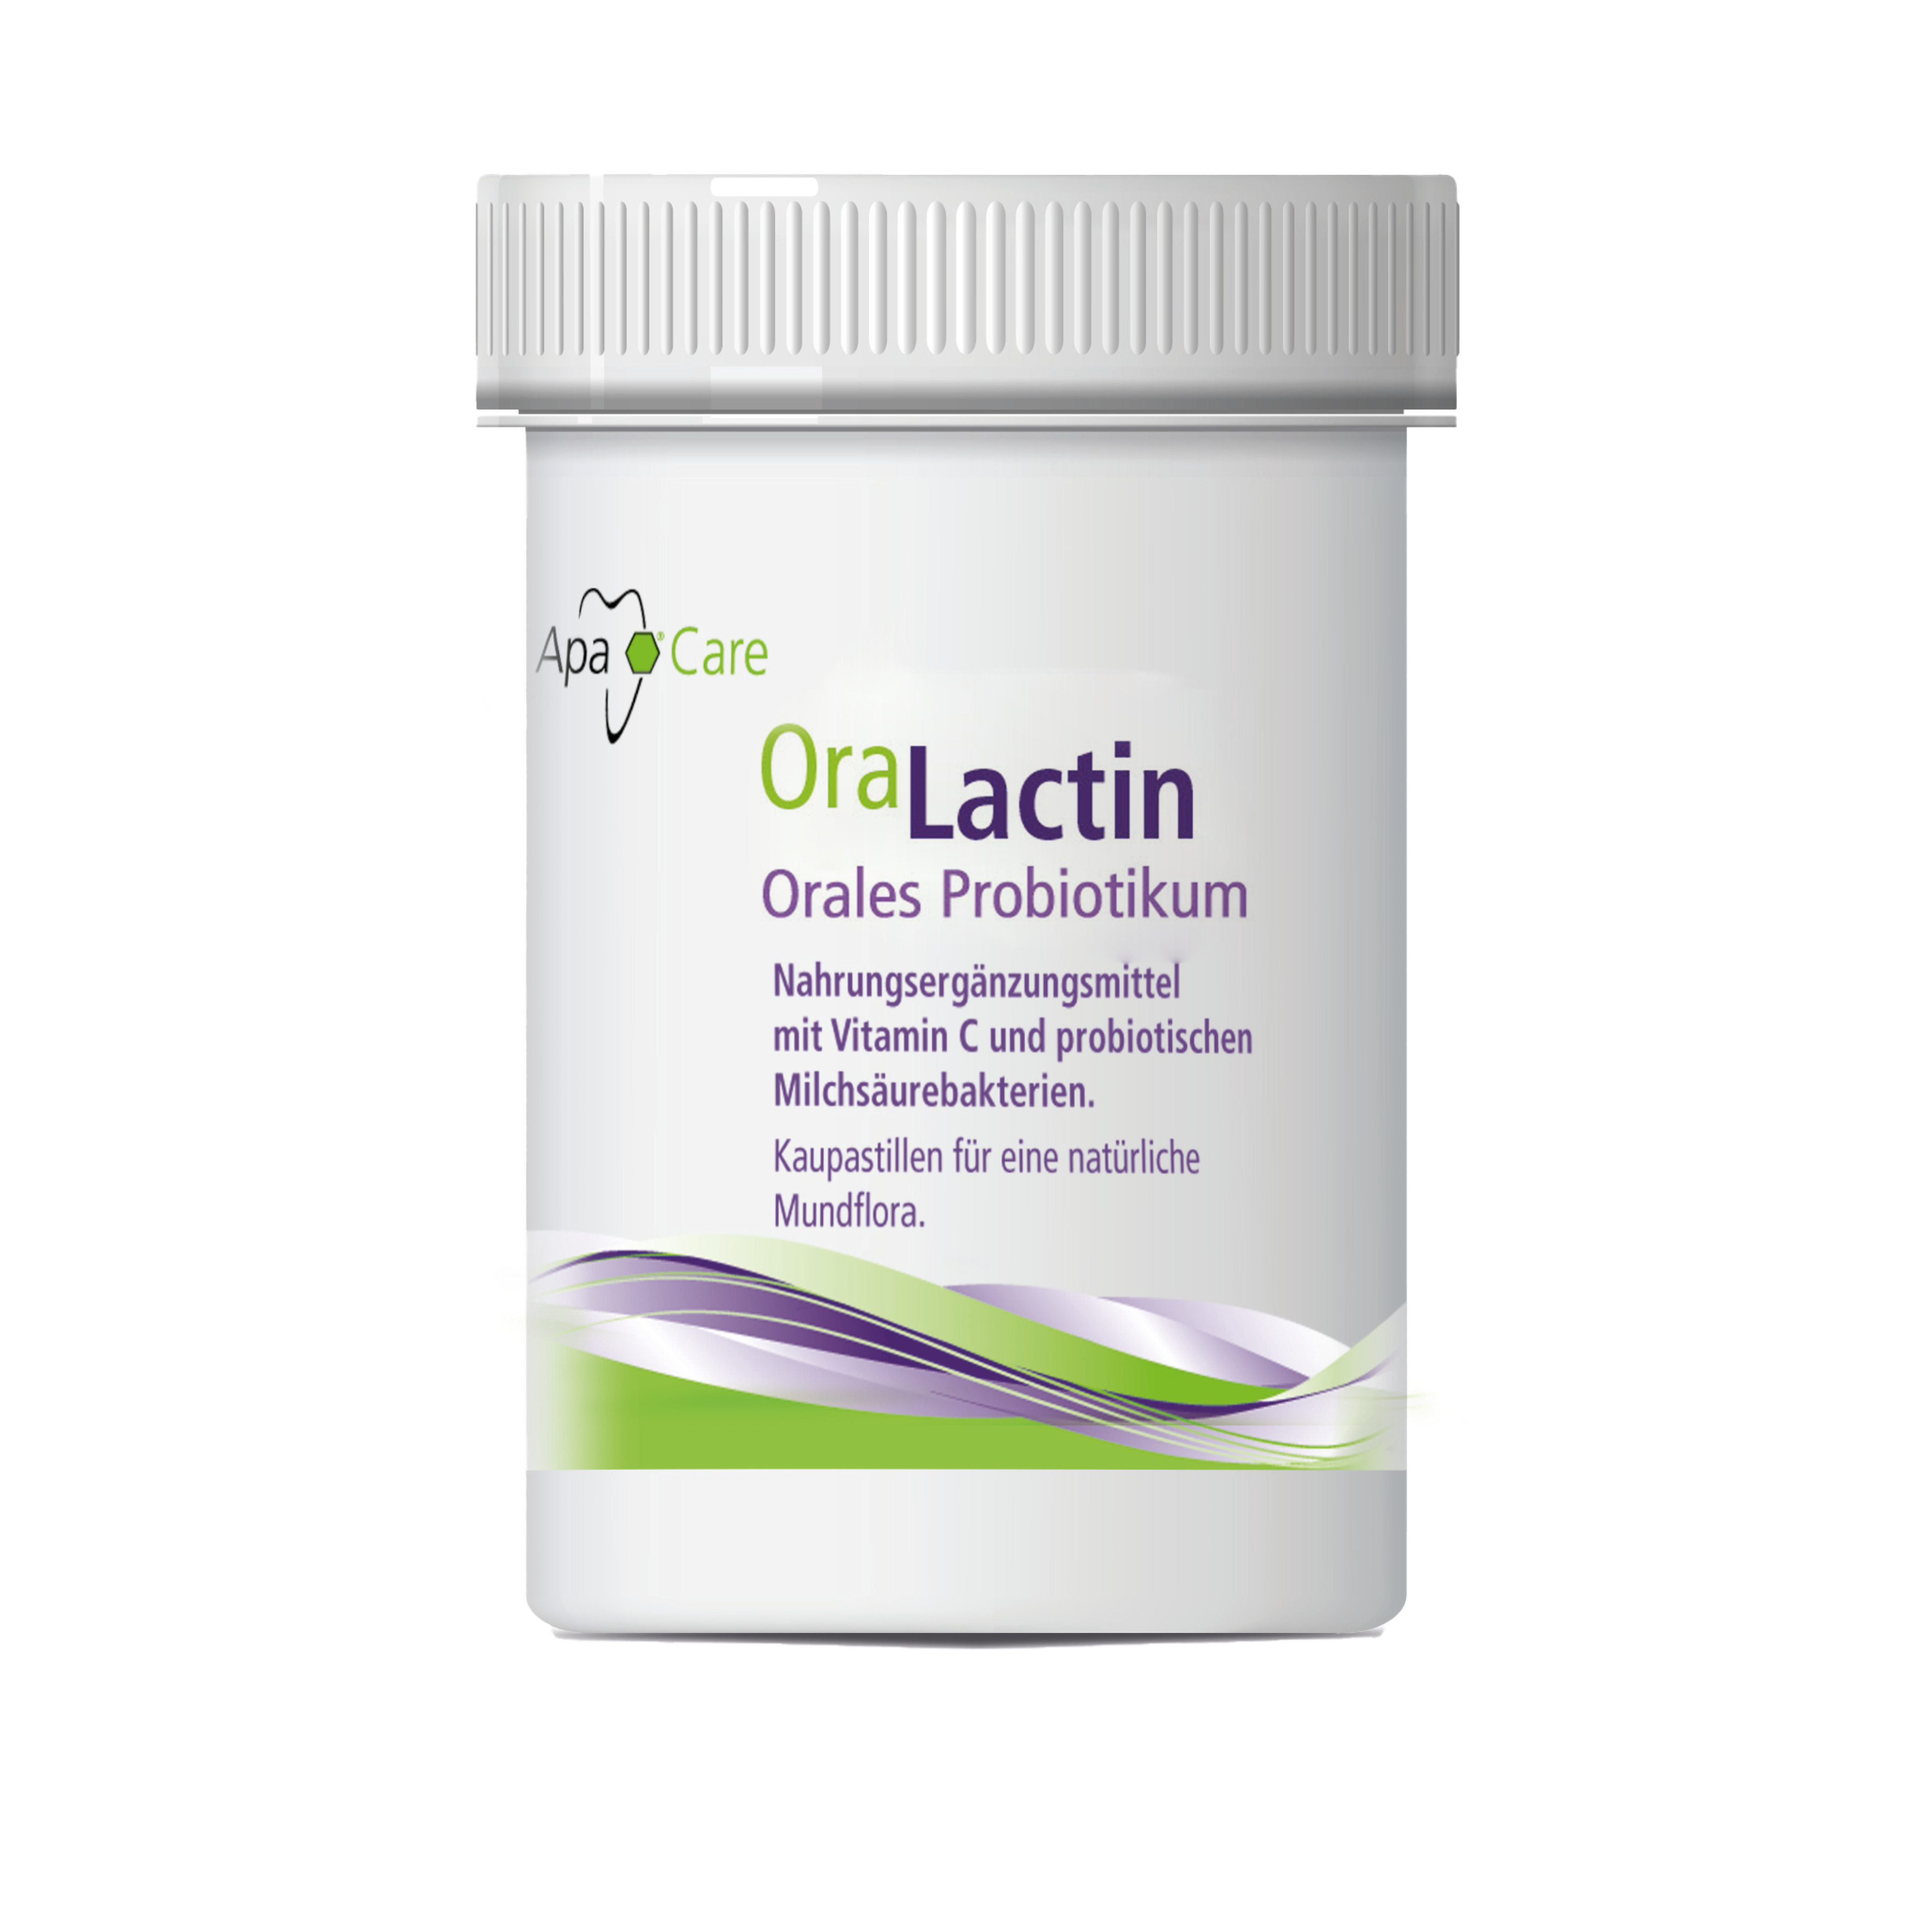  OraLactin Probiotics, pre- and postbiotics set